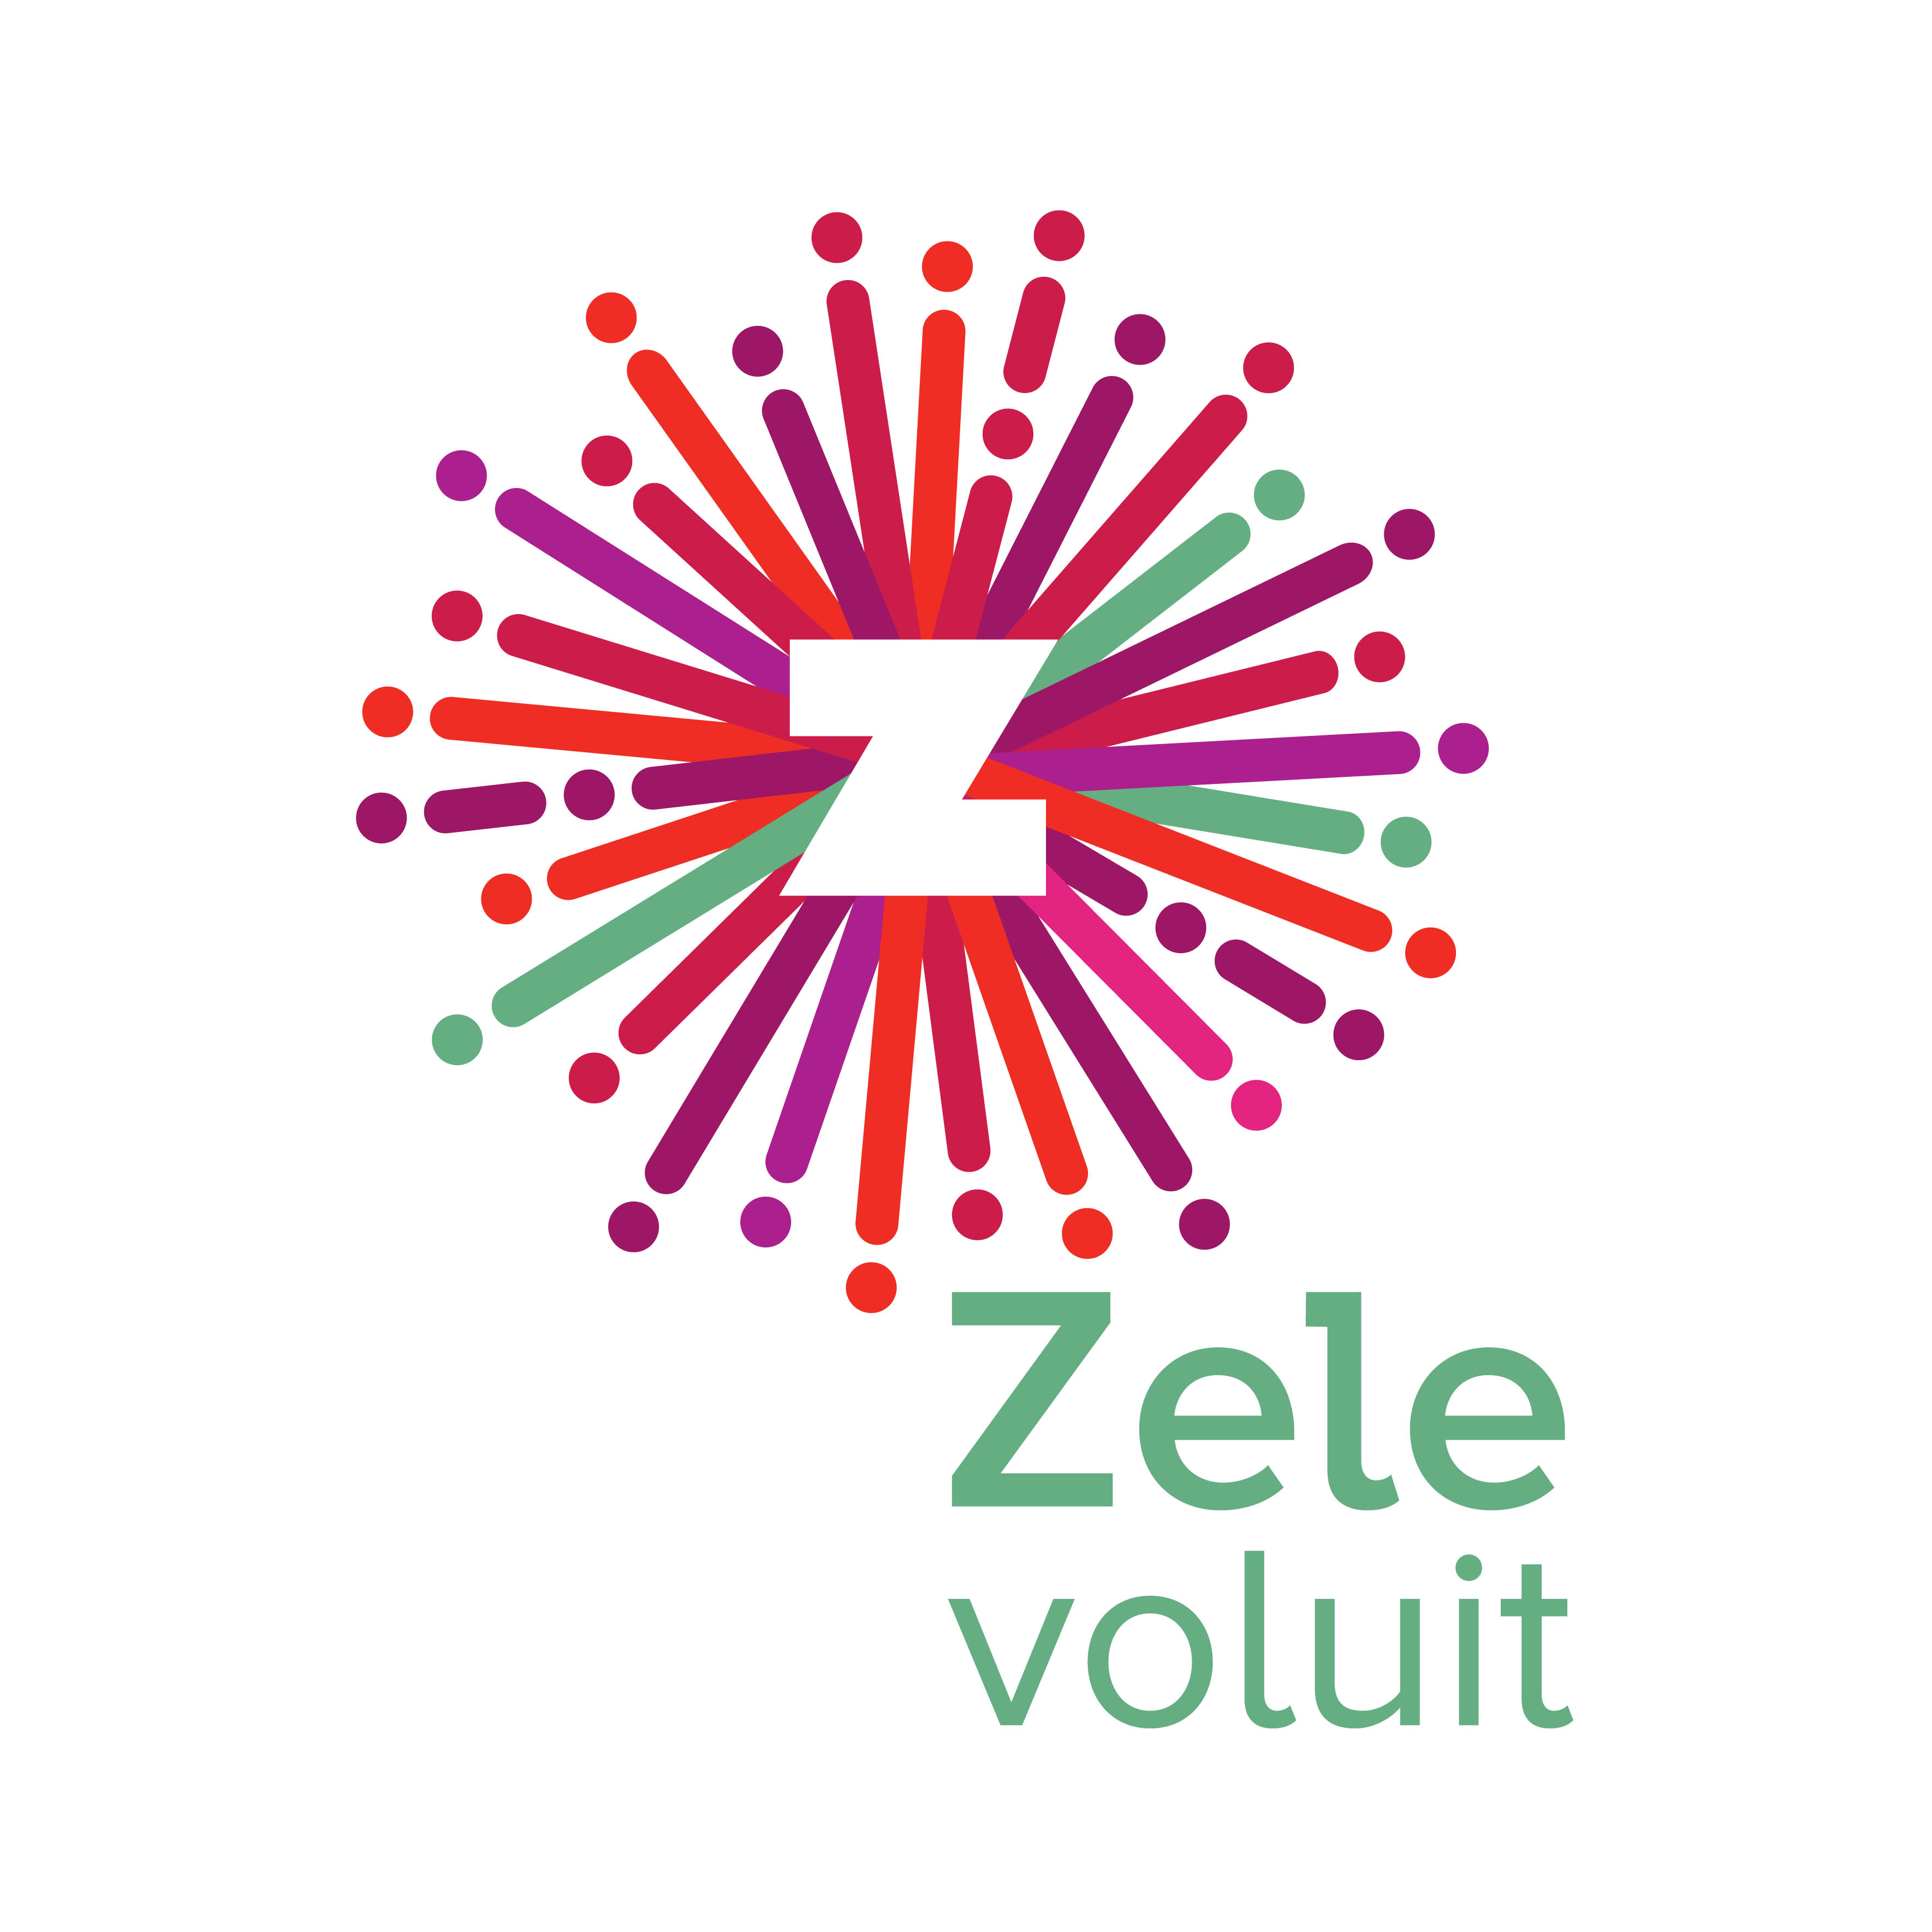 Zele logo jpg